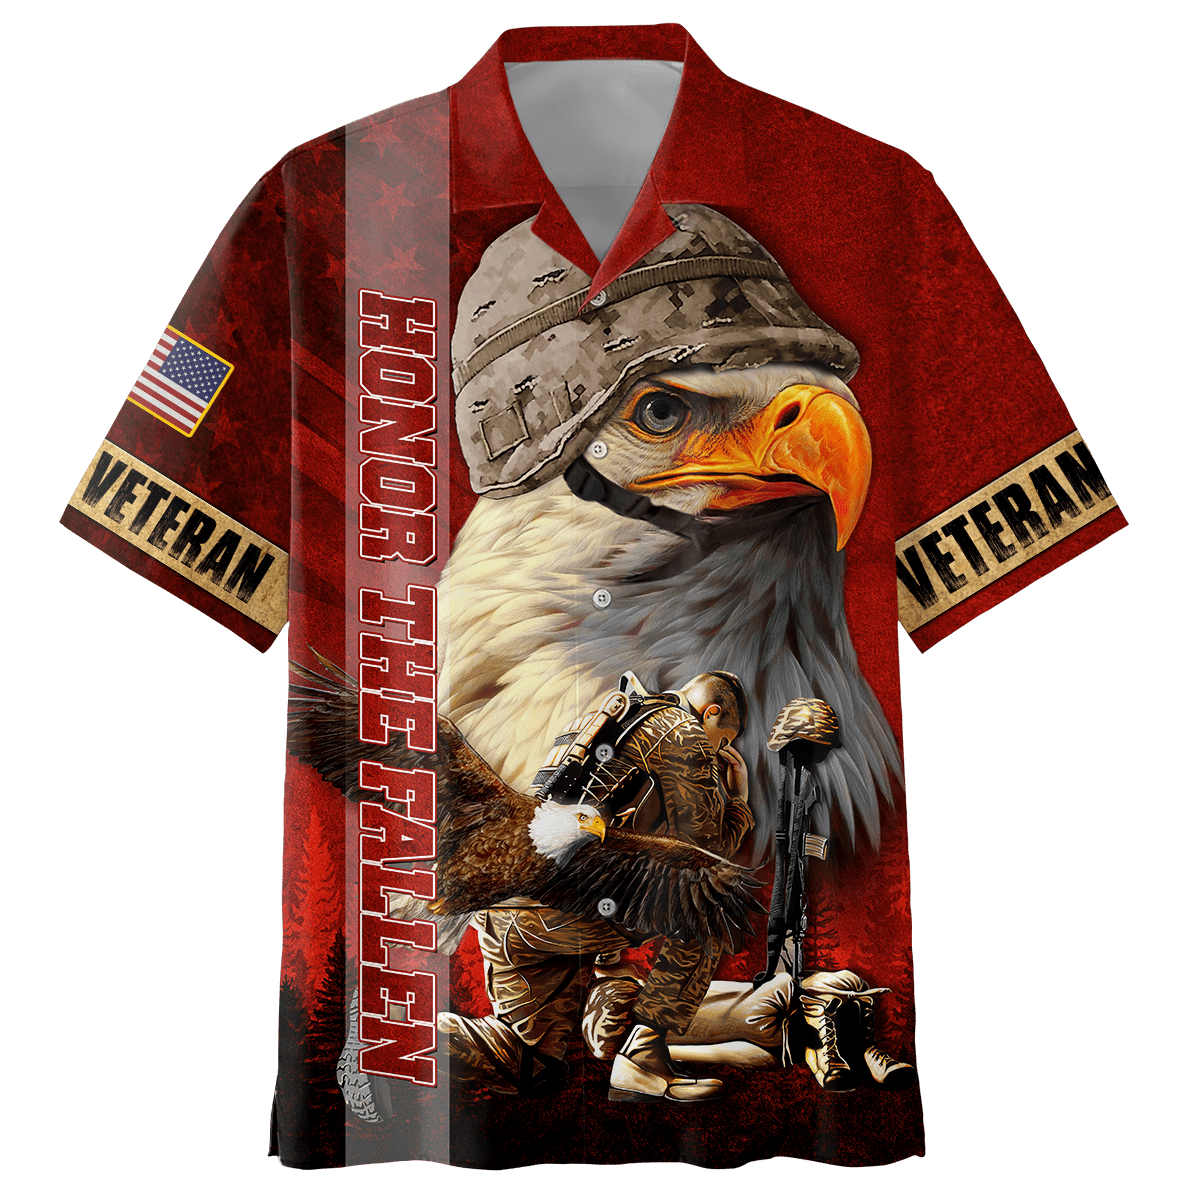 US Veteran - Honor The Fallen Unisex Shirts